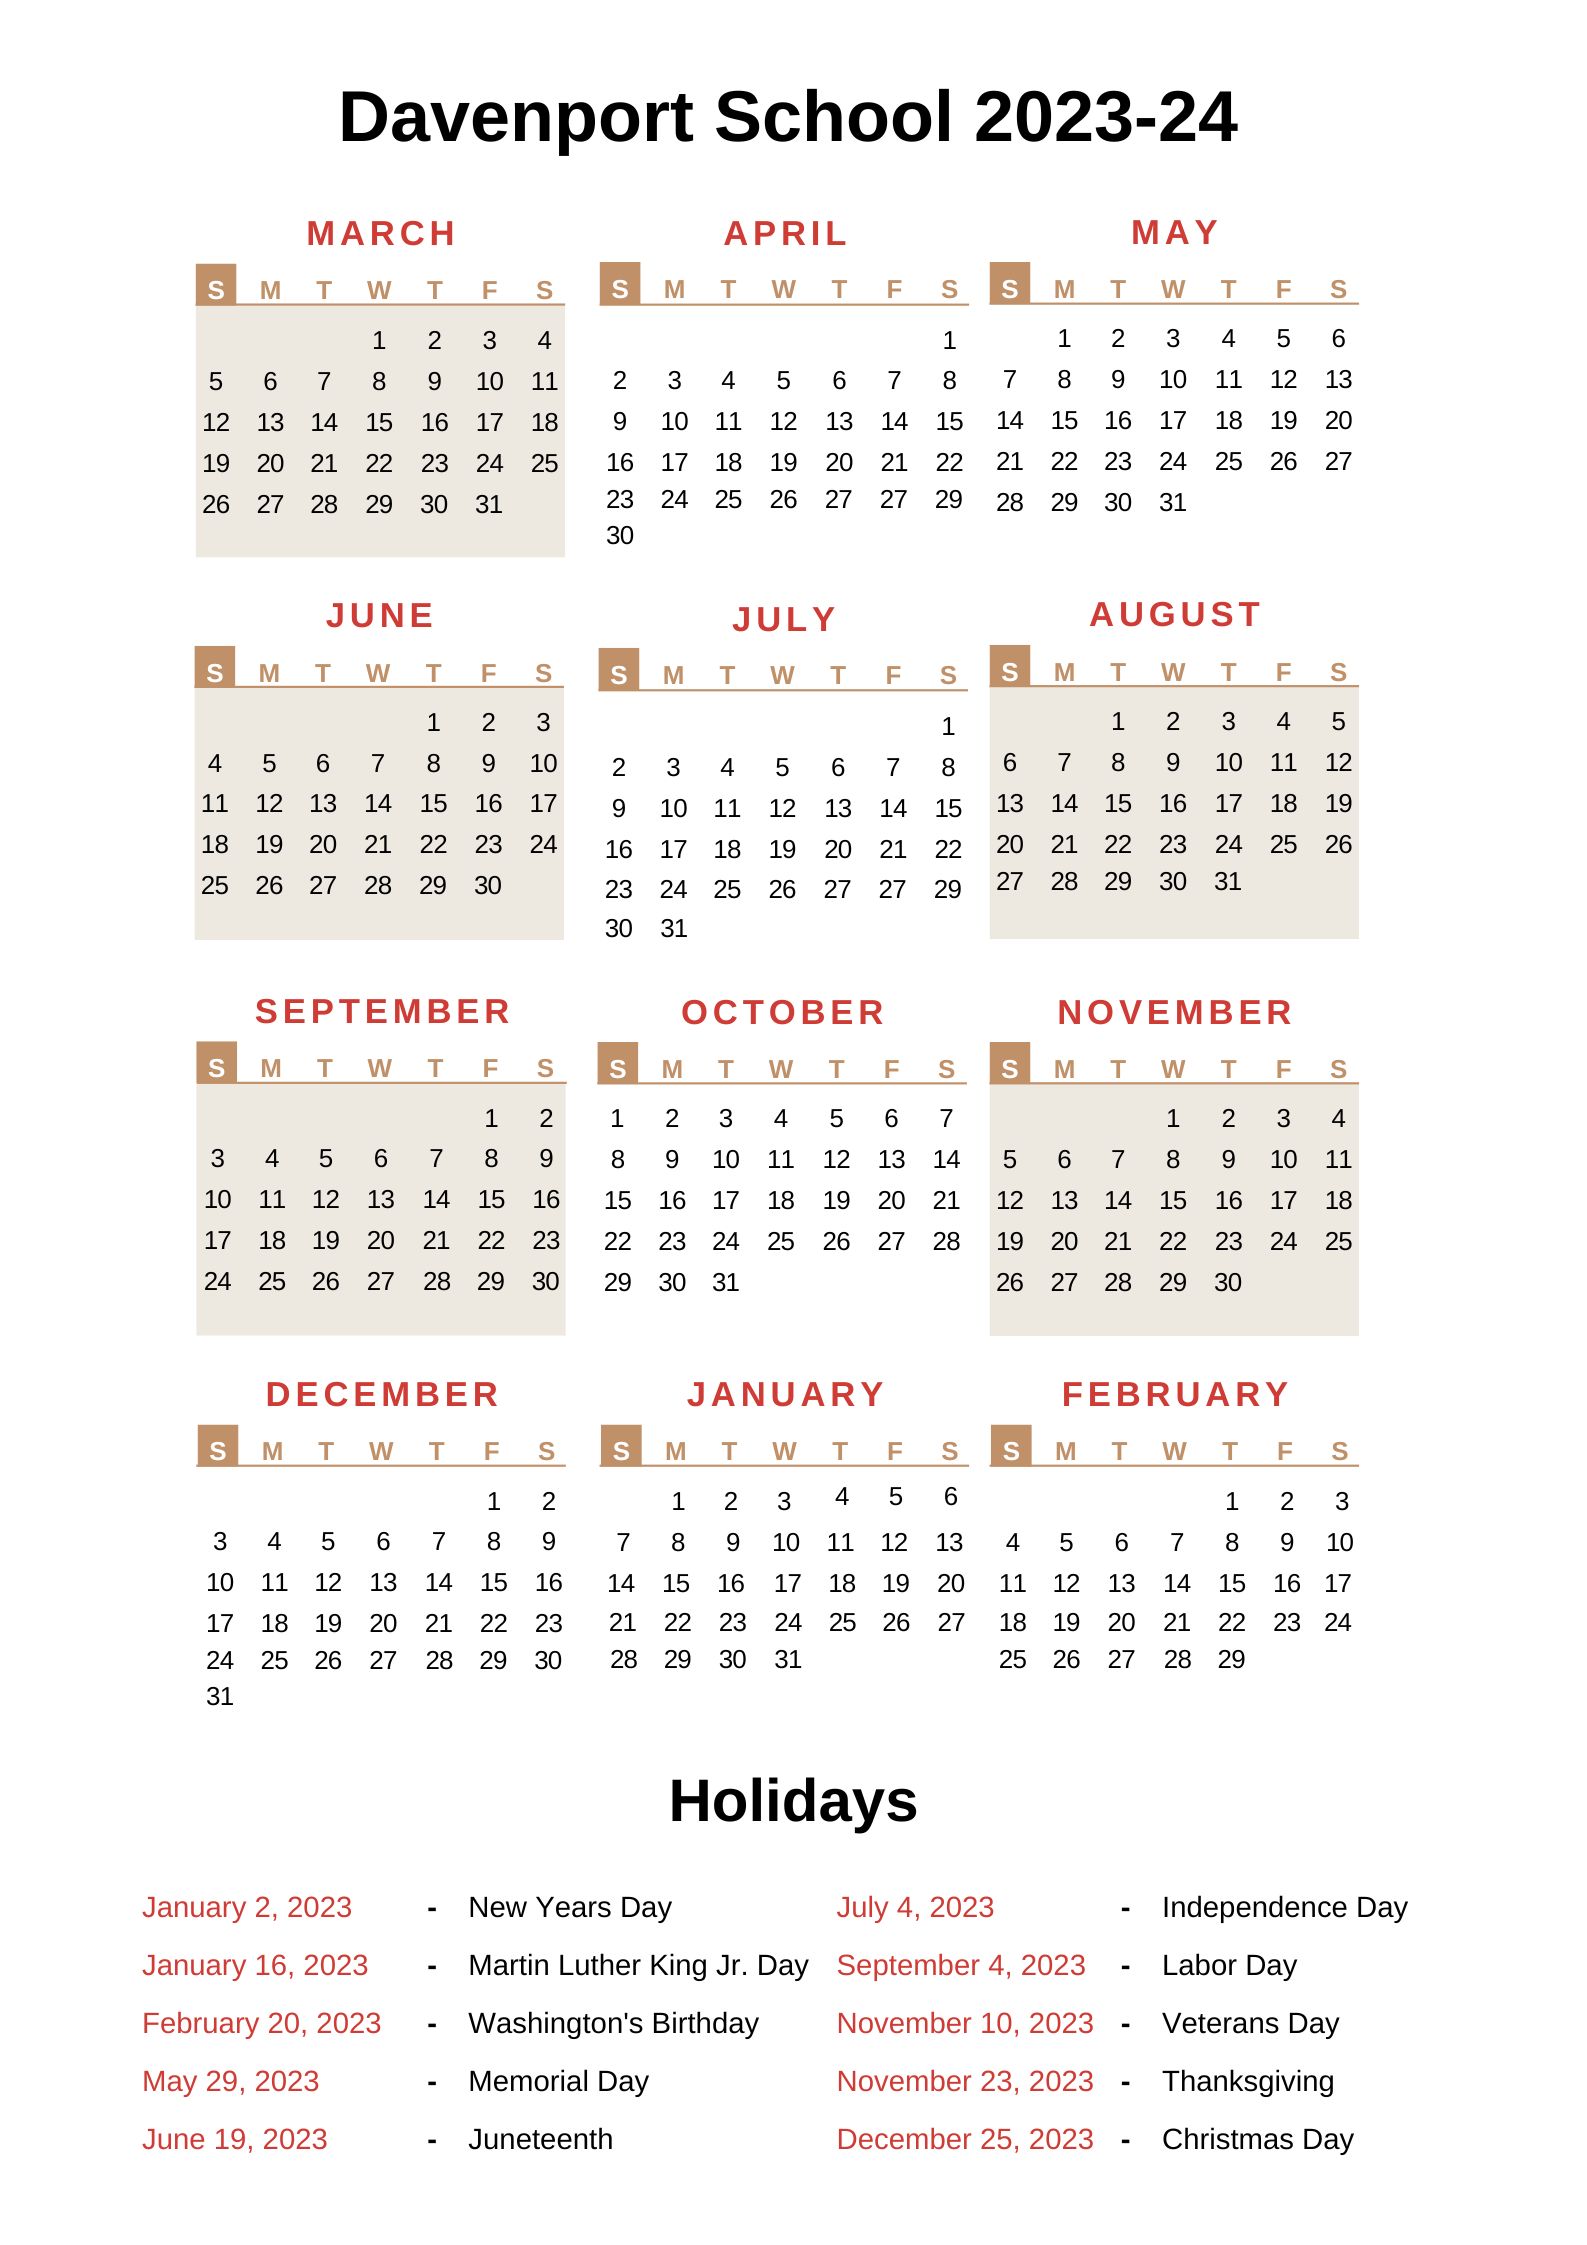 Davenport Schools Calendar 2023-24 With Holidays